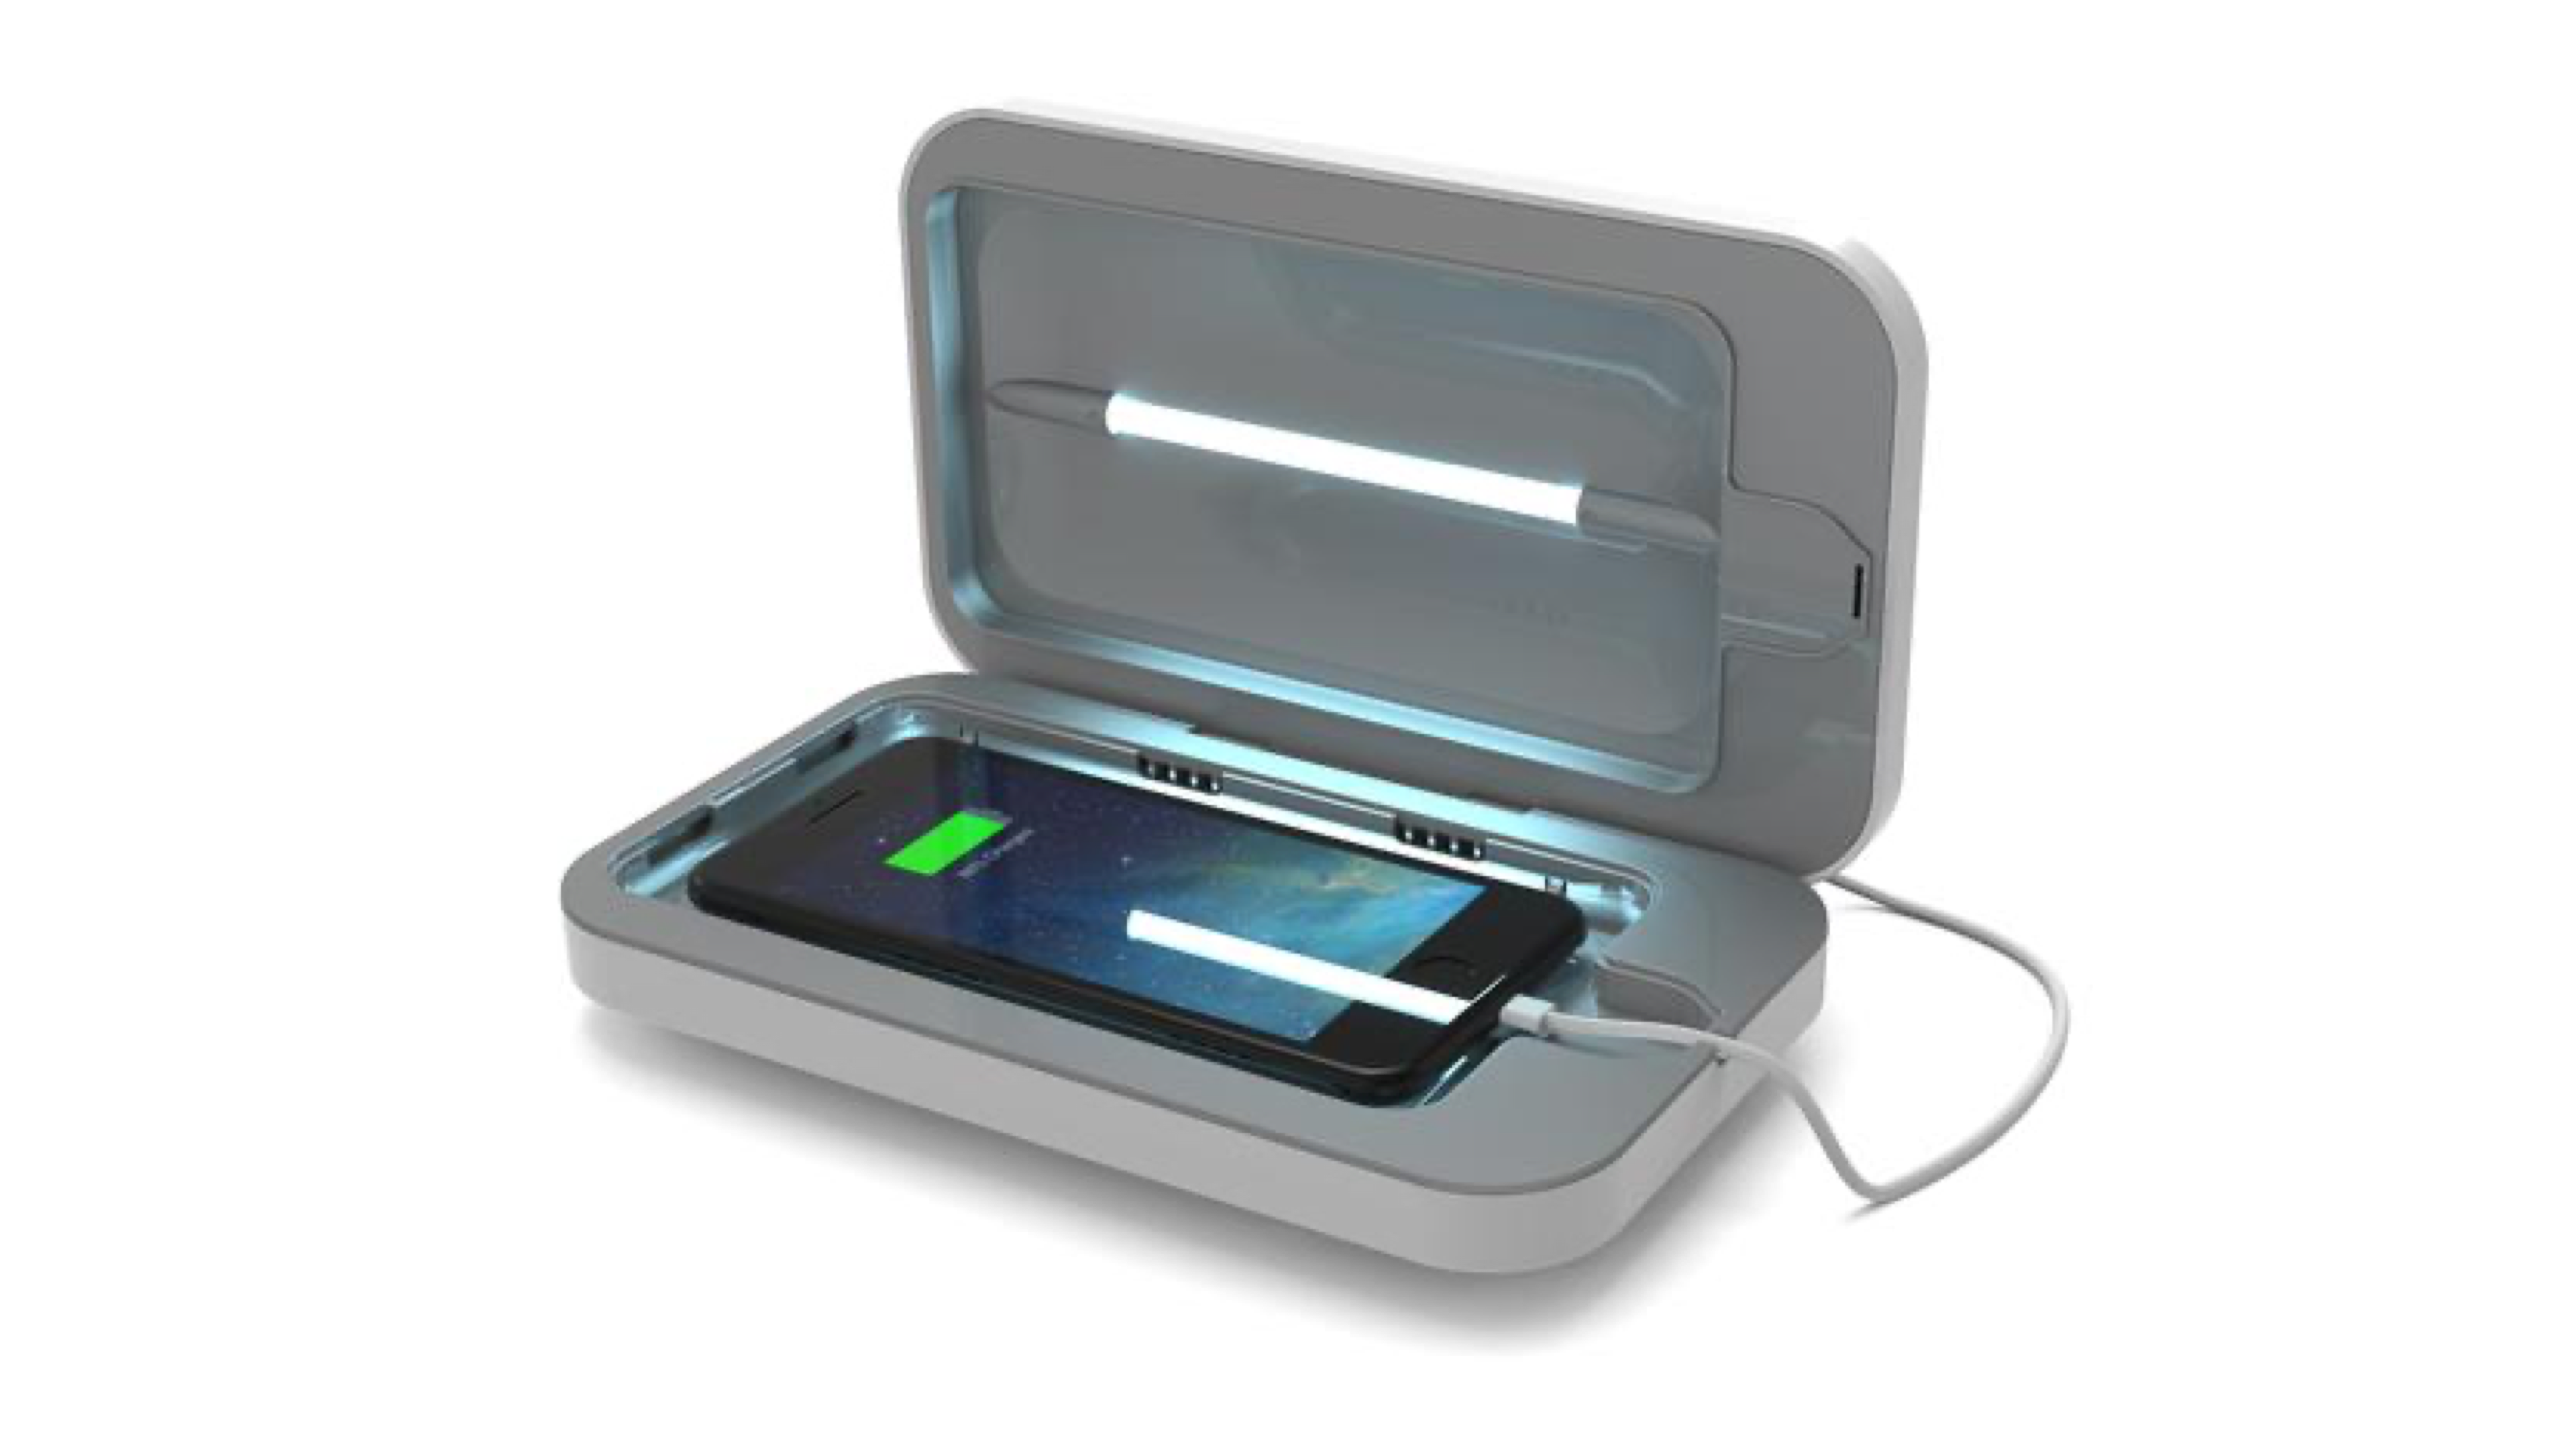 UV sanitizing box for your phone